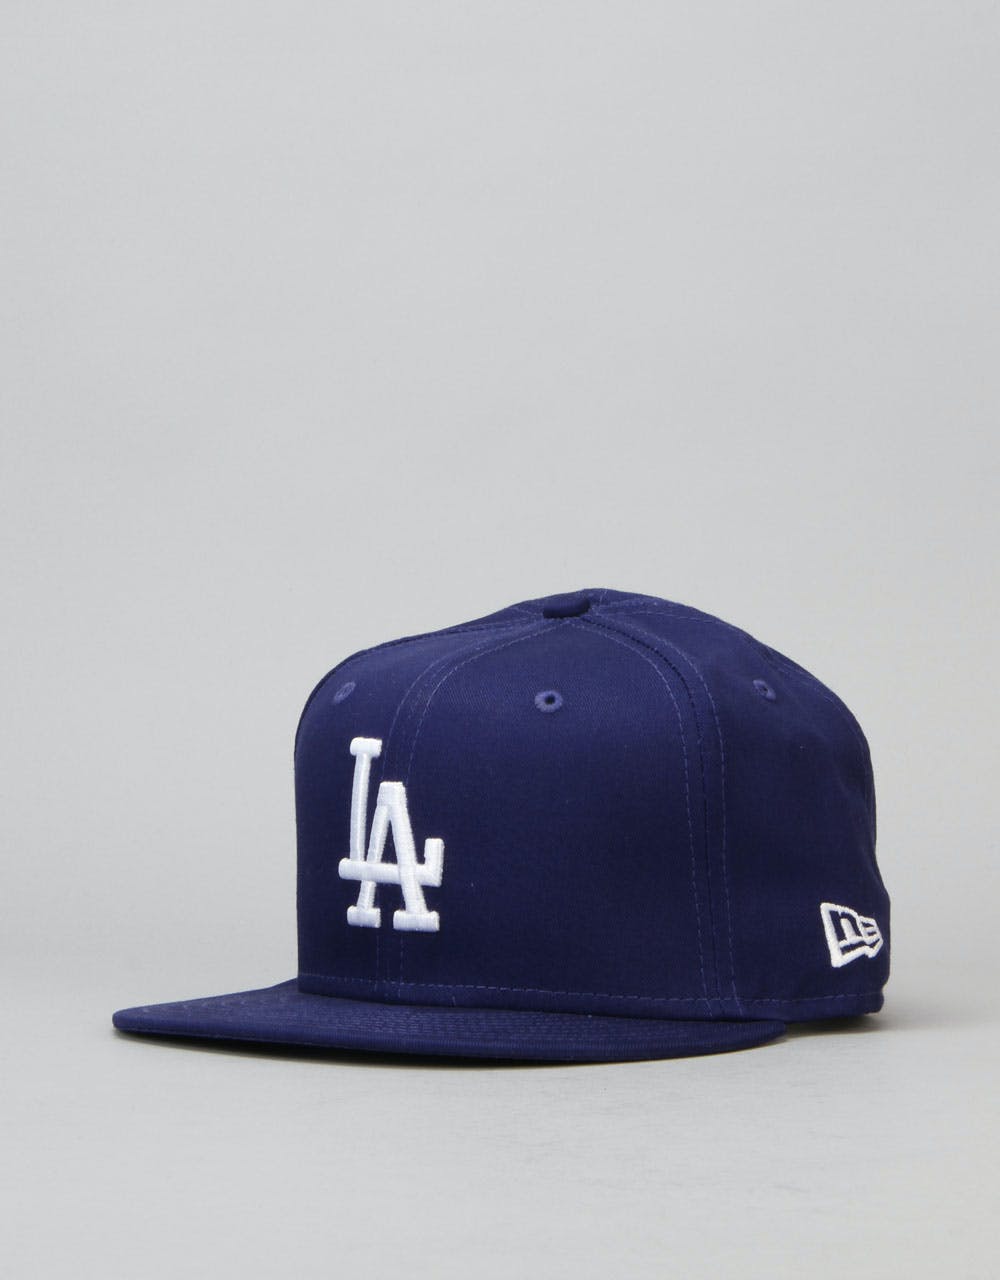 New Era 9Fifty MLB Los Angeles Dodgers Snapback Cap - Royal/White